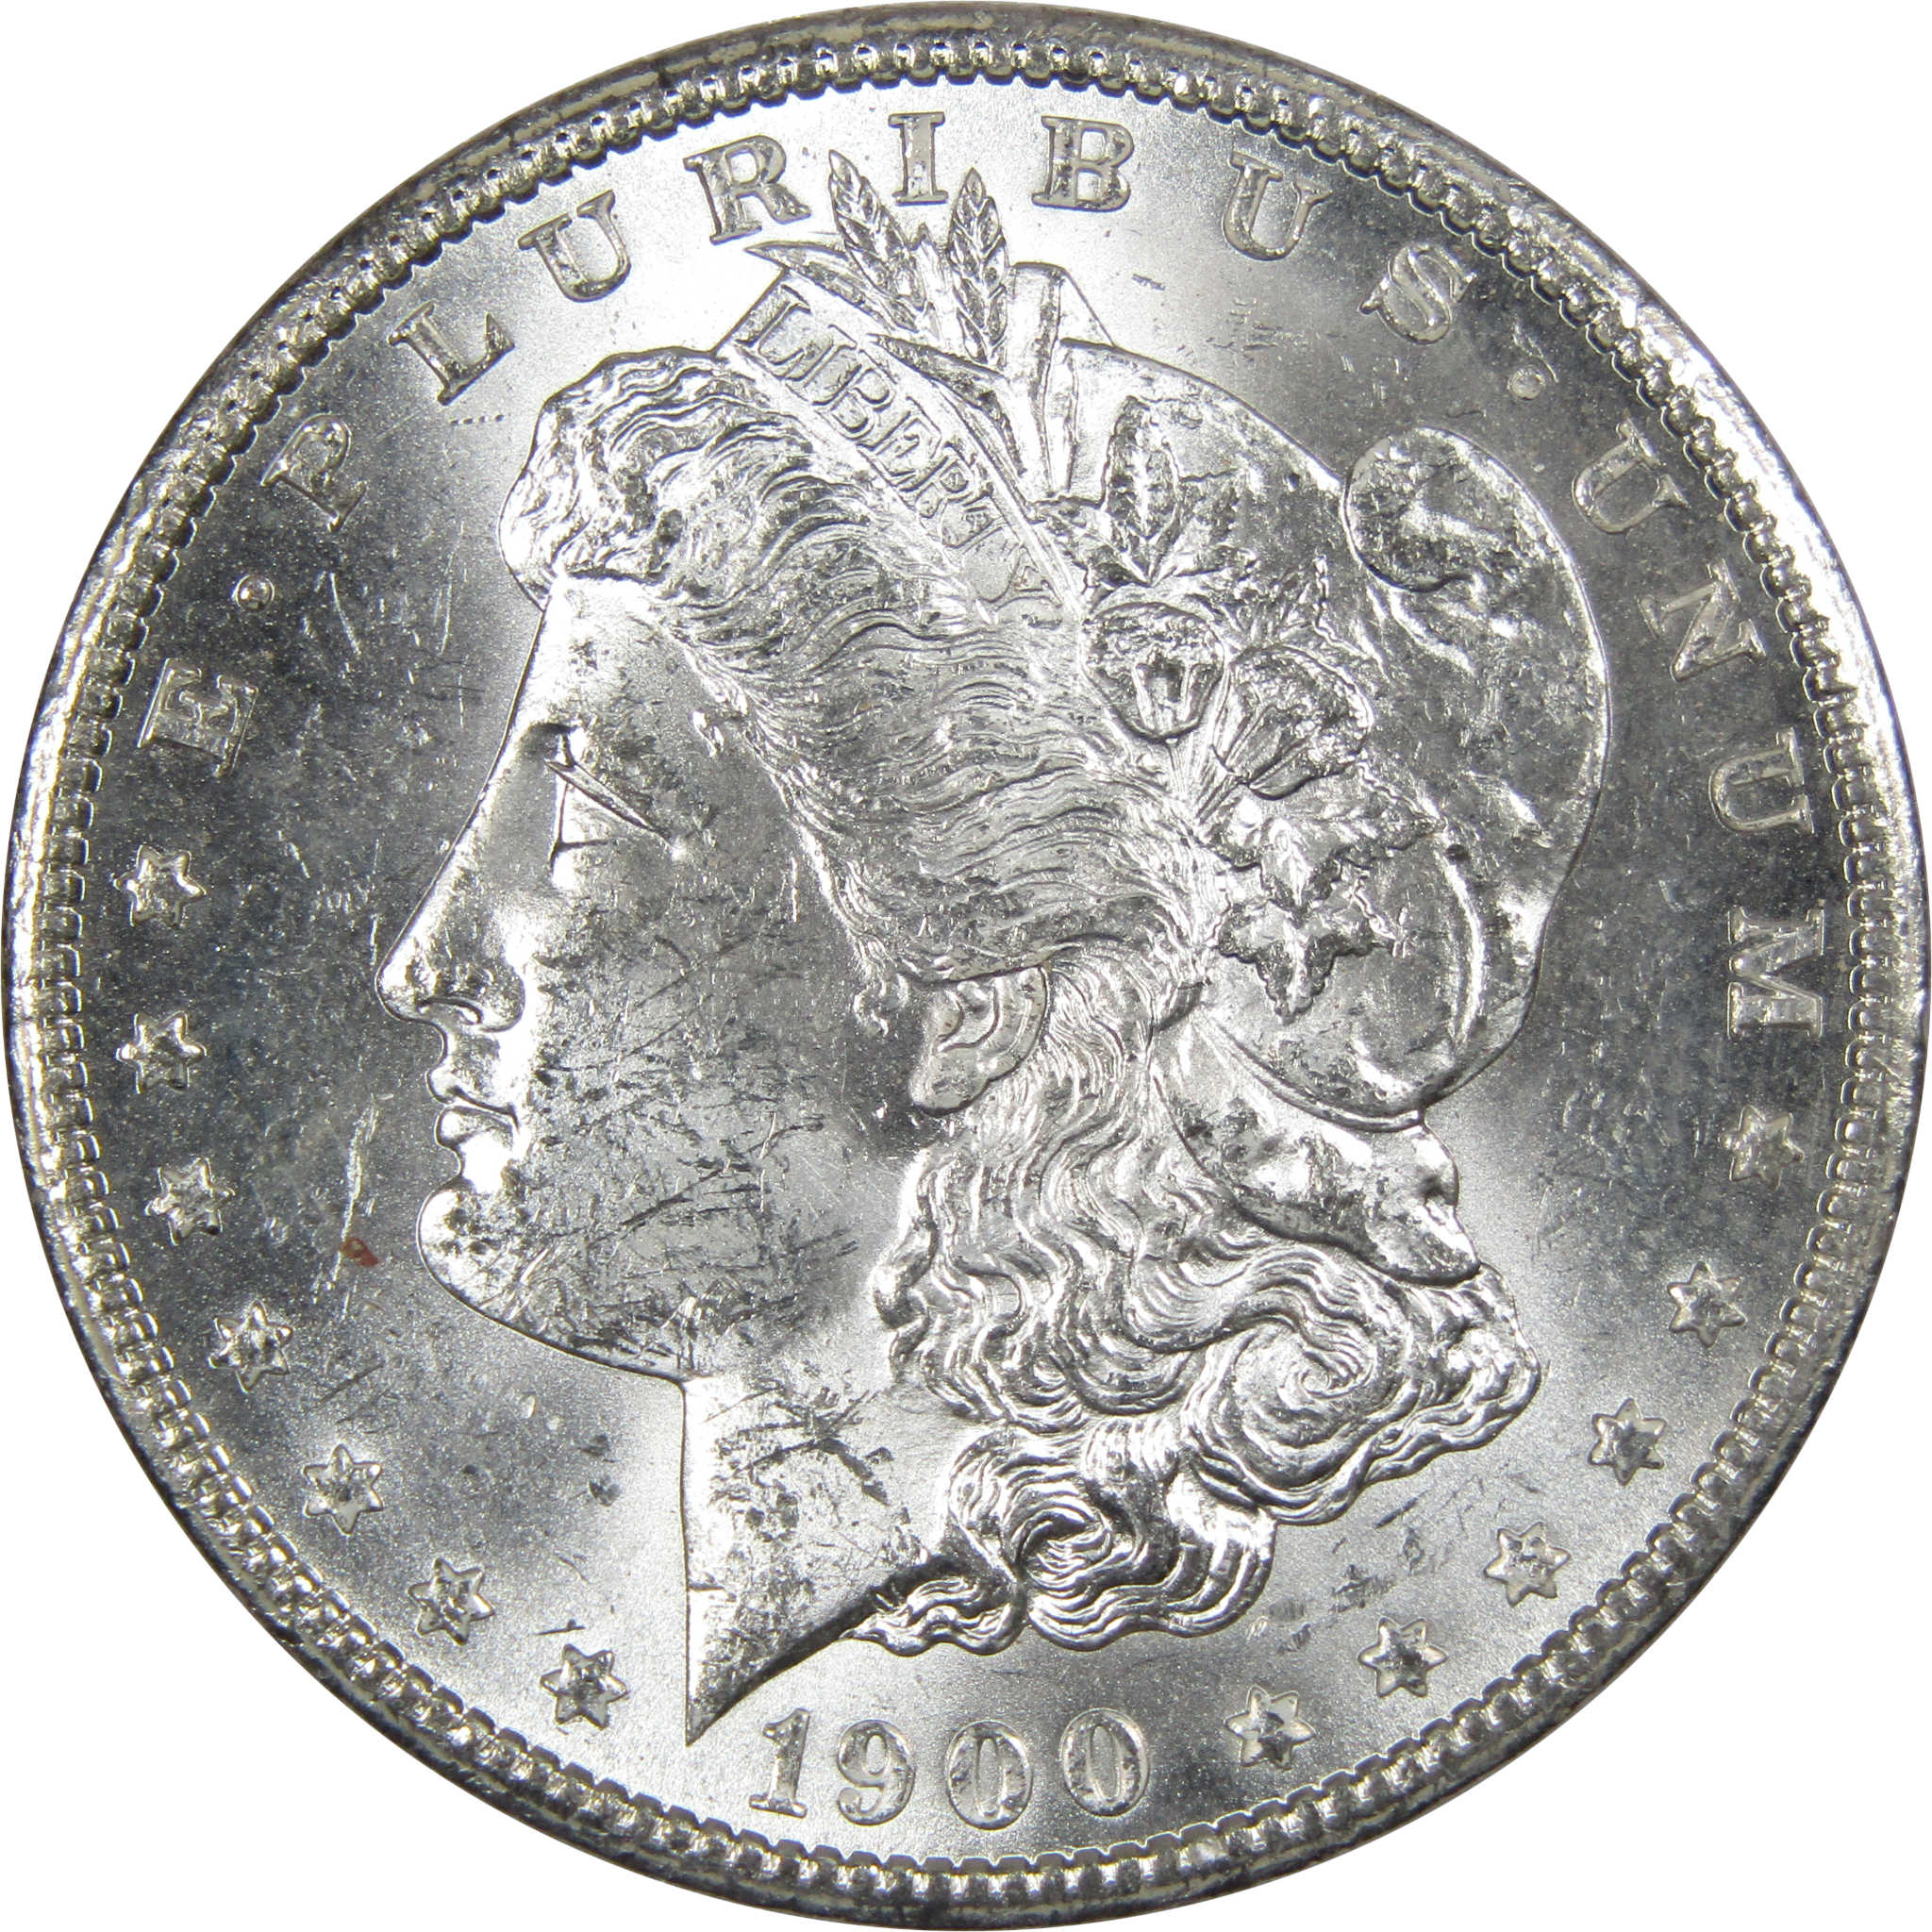 1900 O Morgan Dollar BU Uncirculated Mint State 90% Silver SKU:IPC9782 - Morgan coin - Morgan silver dollar - Morgan silver dollar for sale - Profile Coins &amp; Collectibles